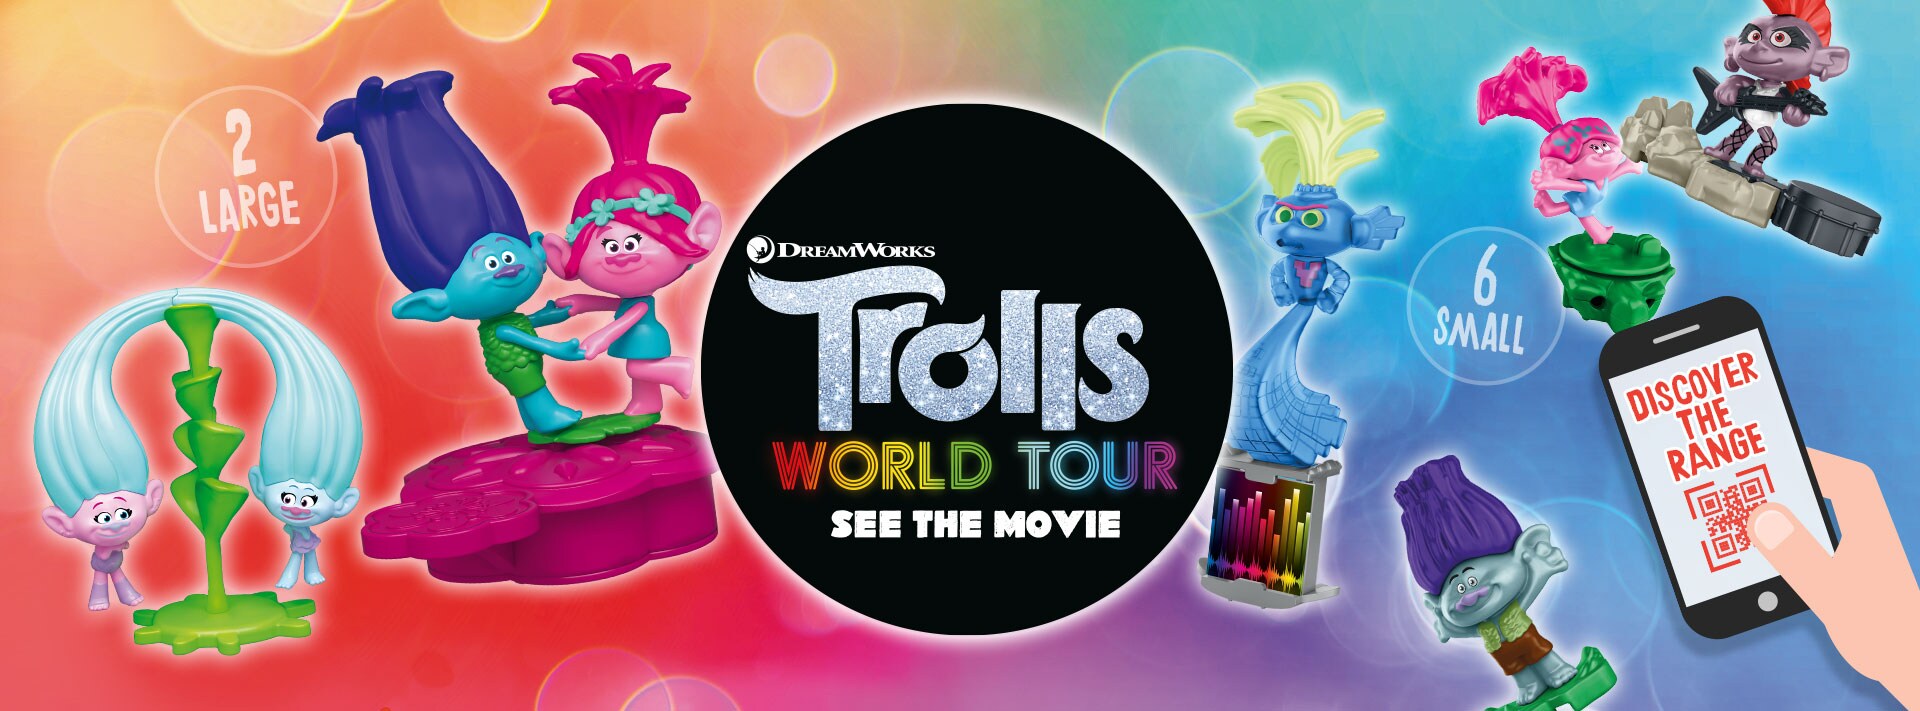 Trolls World Tour - See the movie